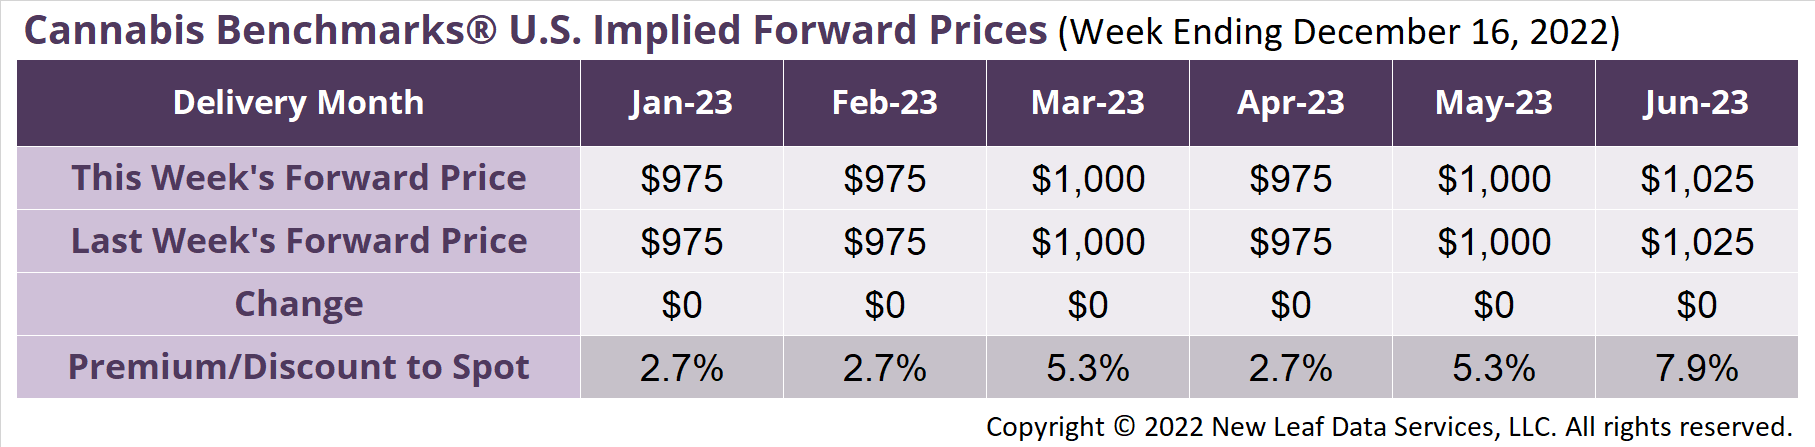 Cannabis Benchmarks U.S Forward Price Curve December 16, 2022